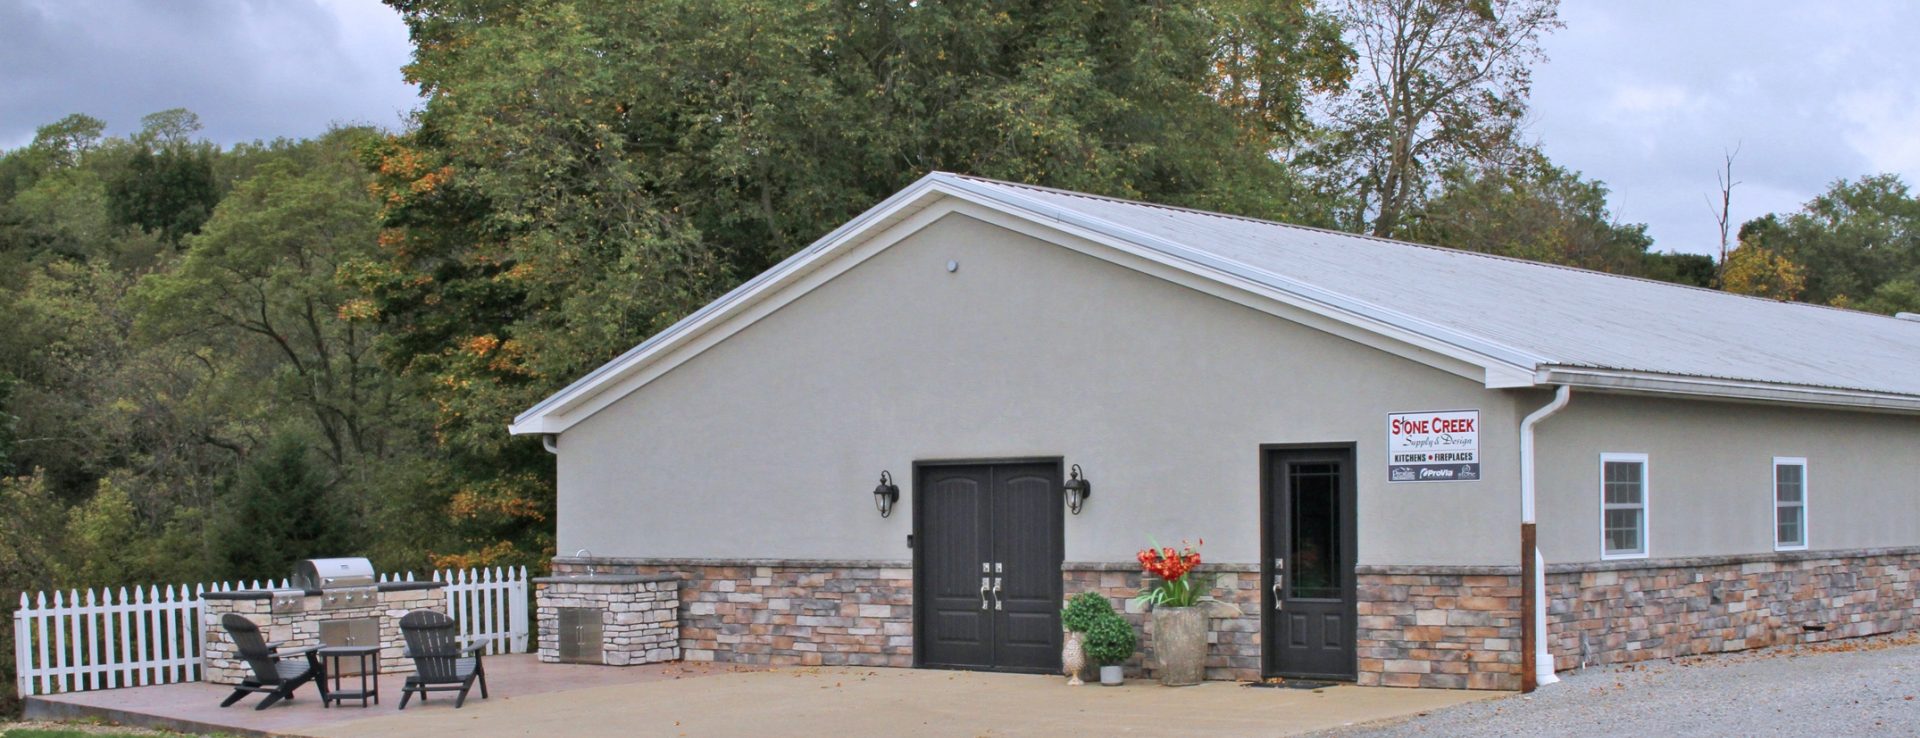 Stone Creek Supply Design Ohio S Amish Country